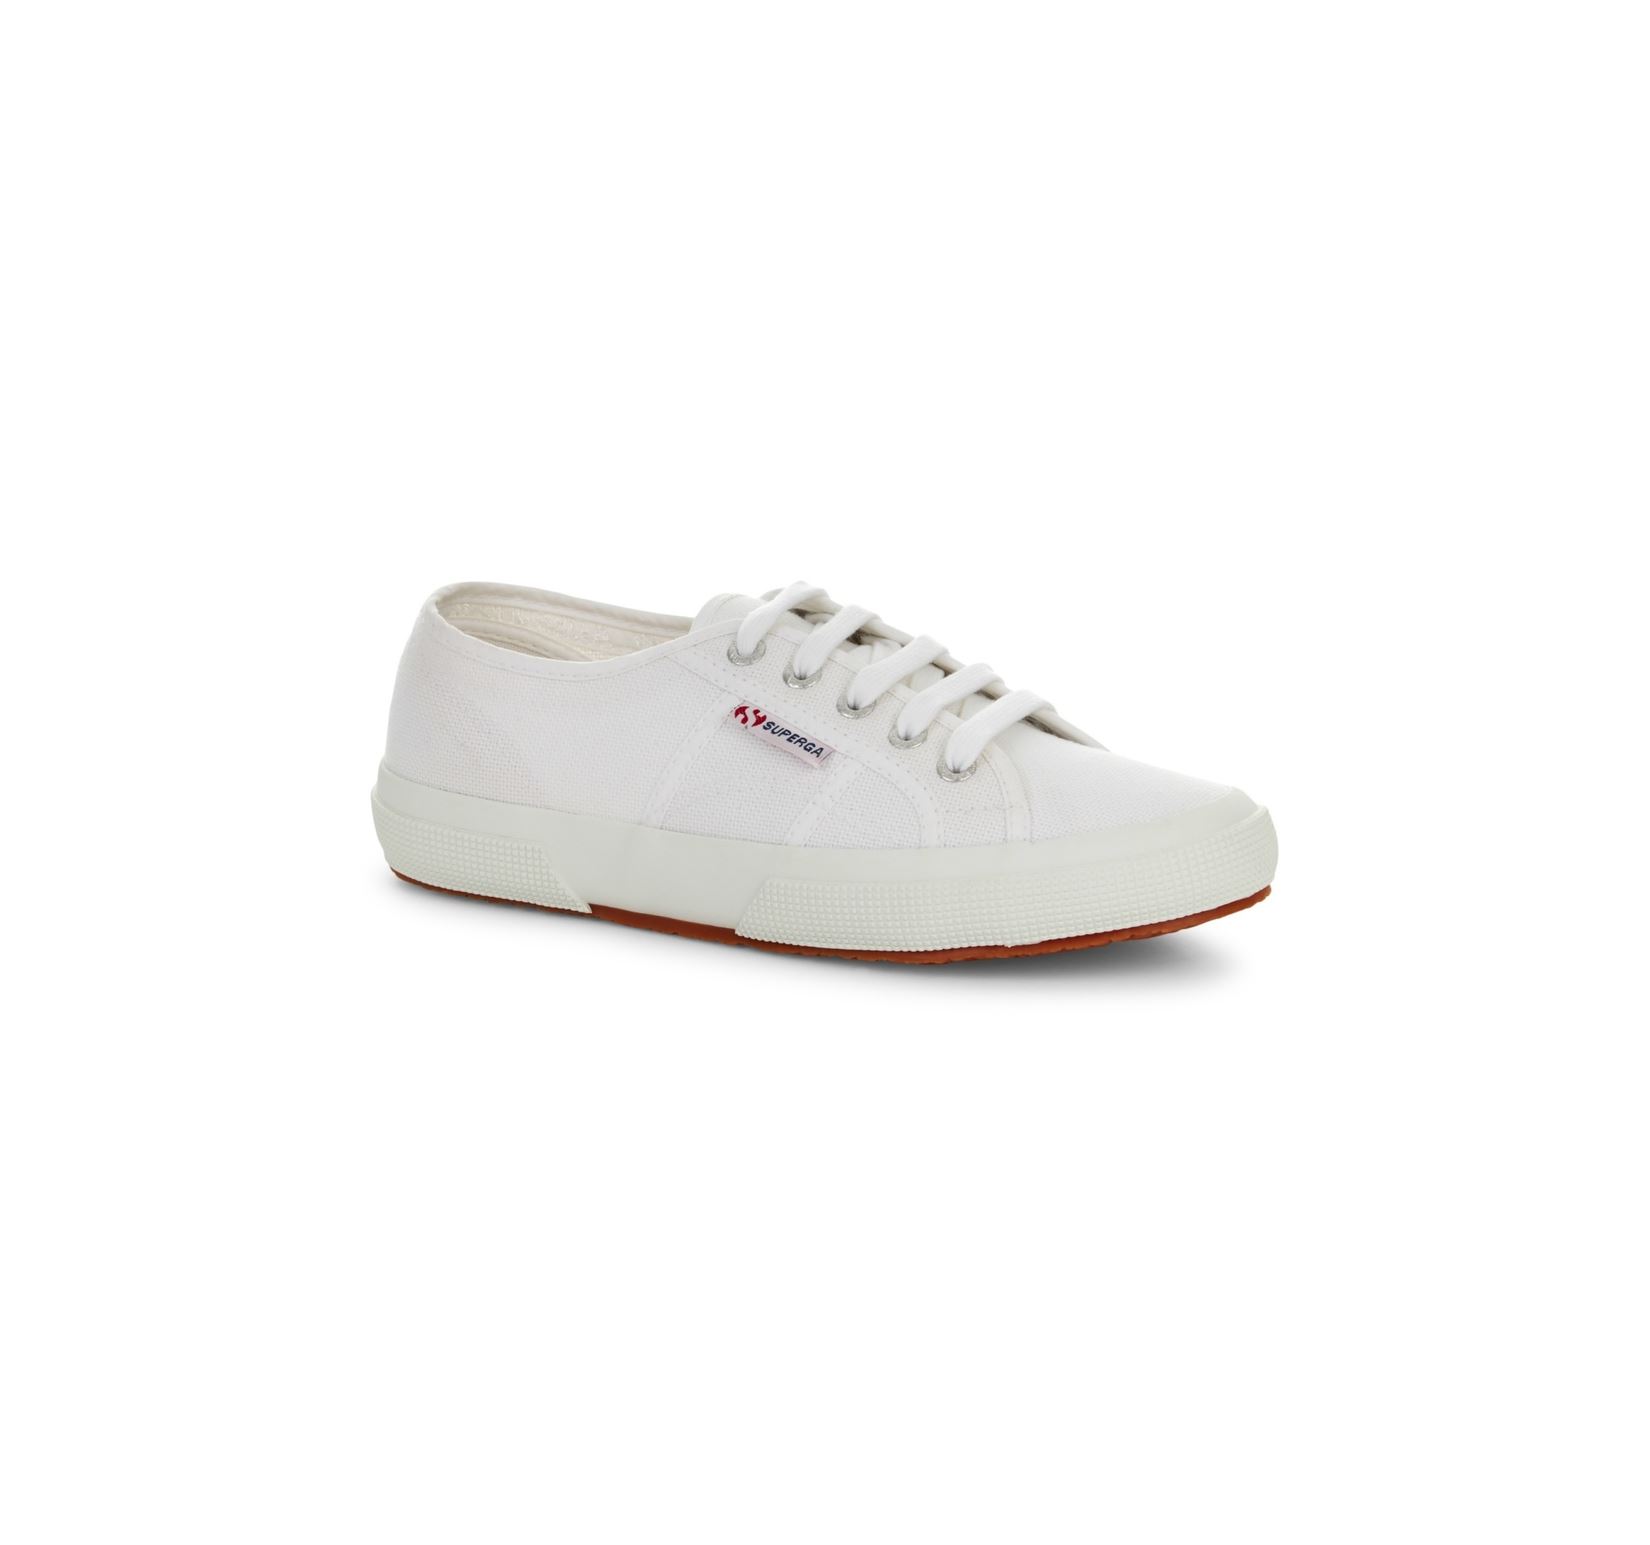 Sneakers Cotu classic, white